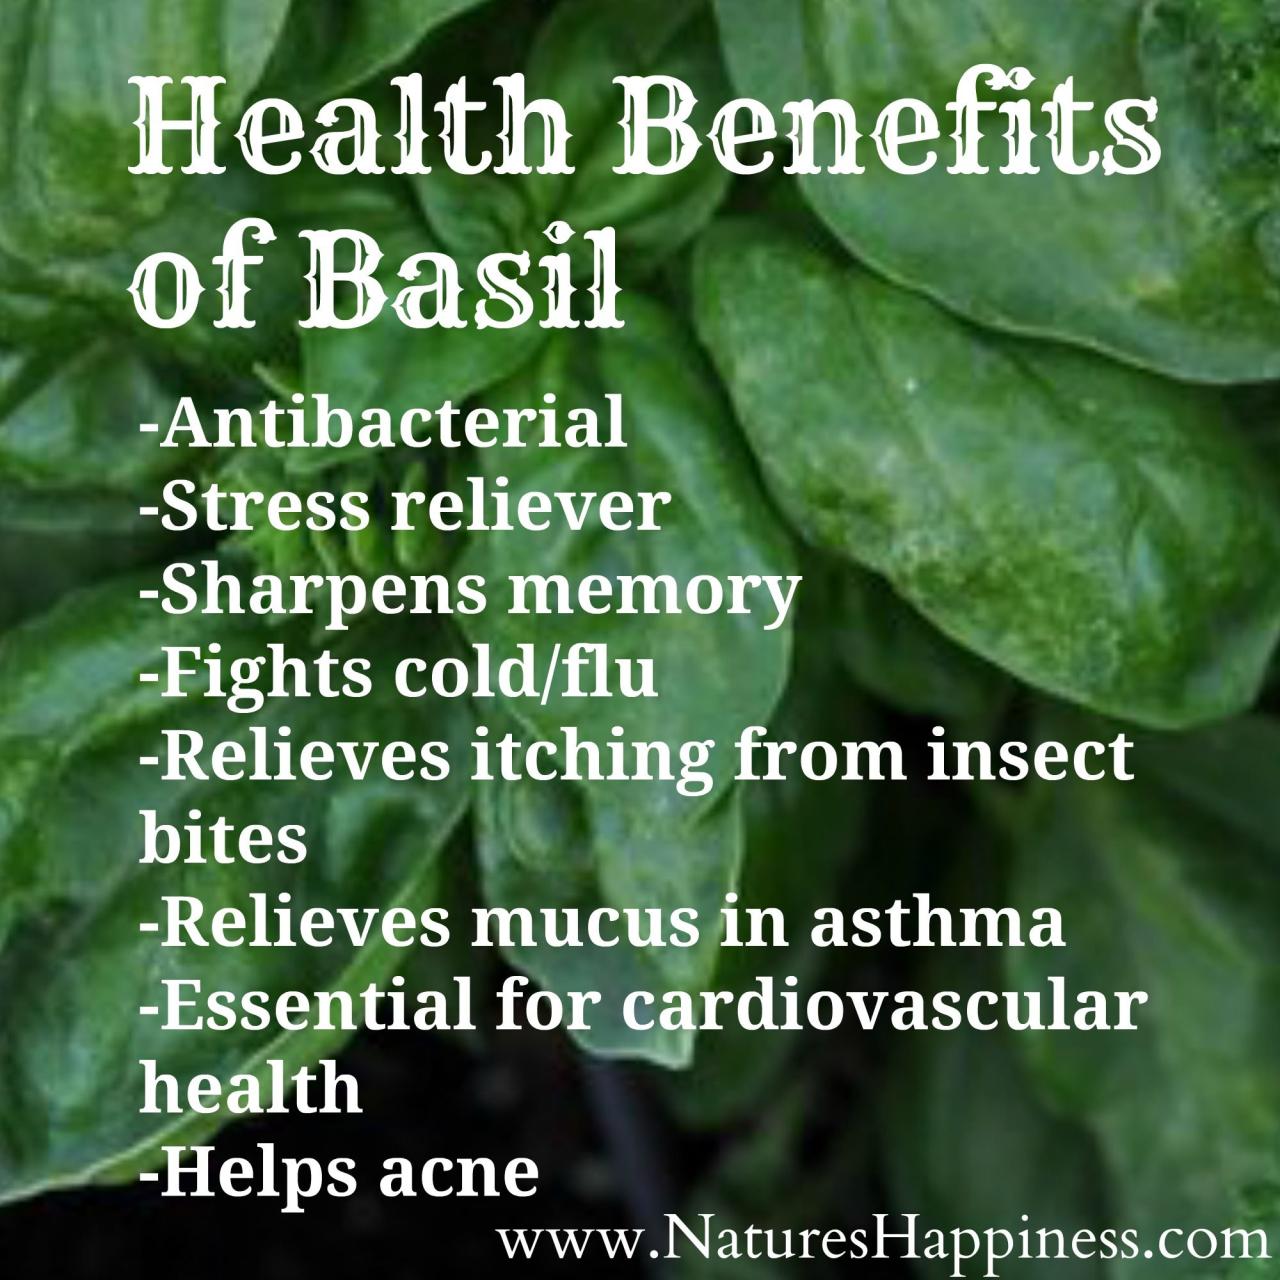 Basil benefits health